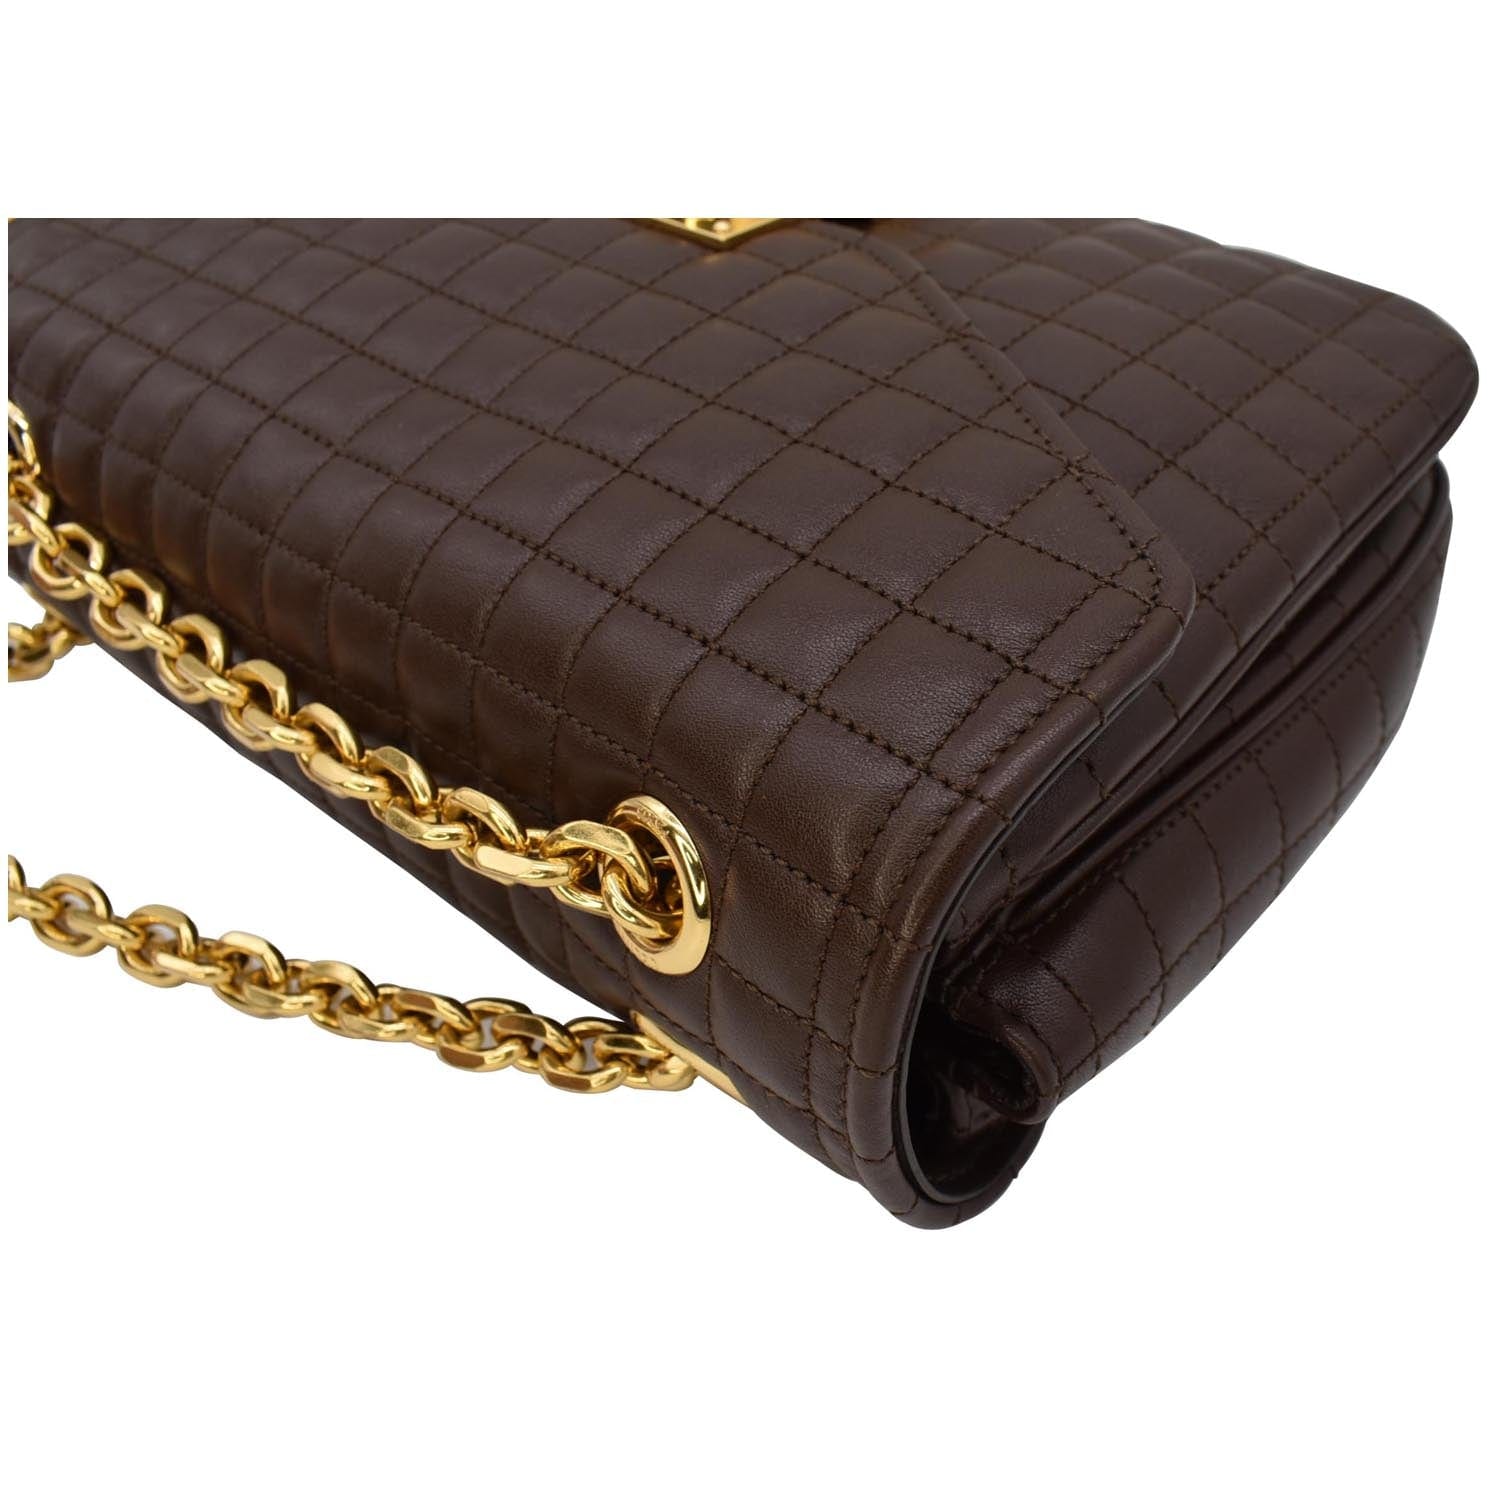 Celine Medium C Quilted Leather Crossbody Bag